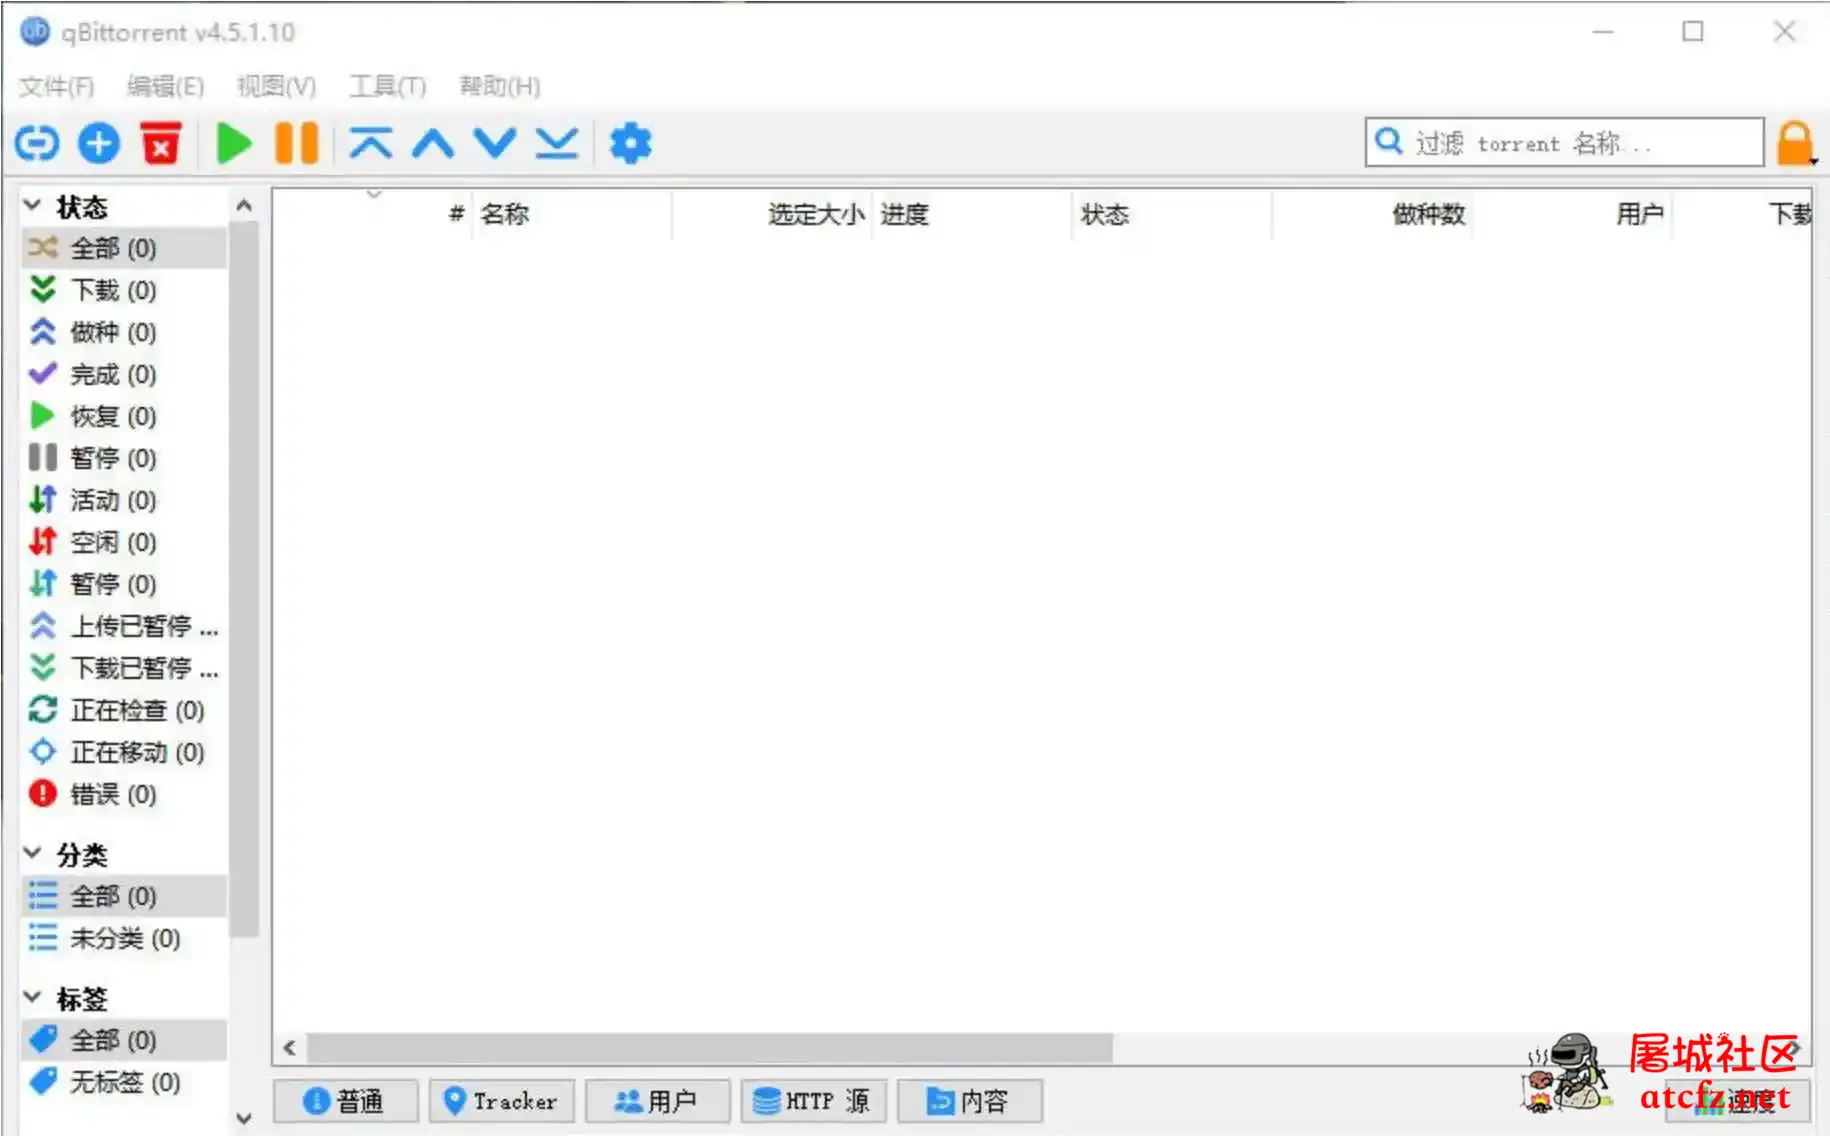 qBittorrent v4.5.3.10增强便携版BT种子下载工具 屠城辅助网www.tcfz1.com4063